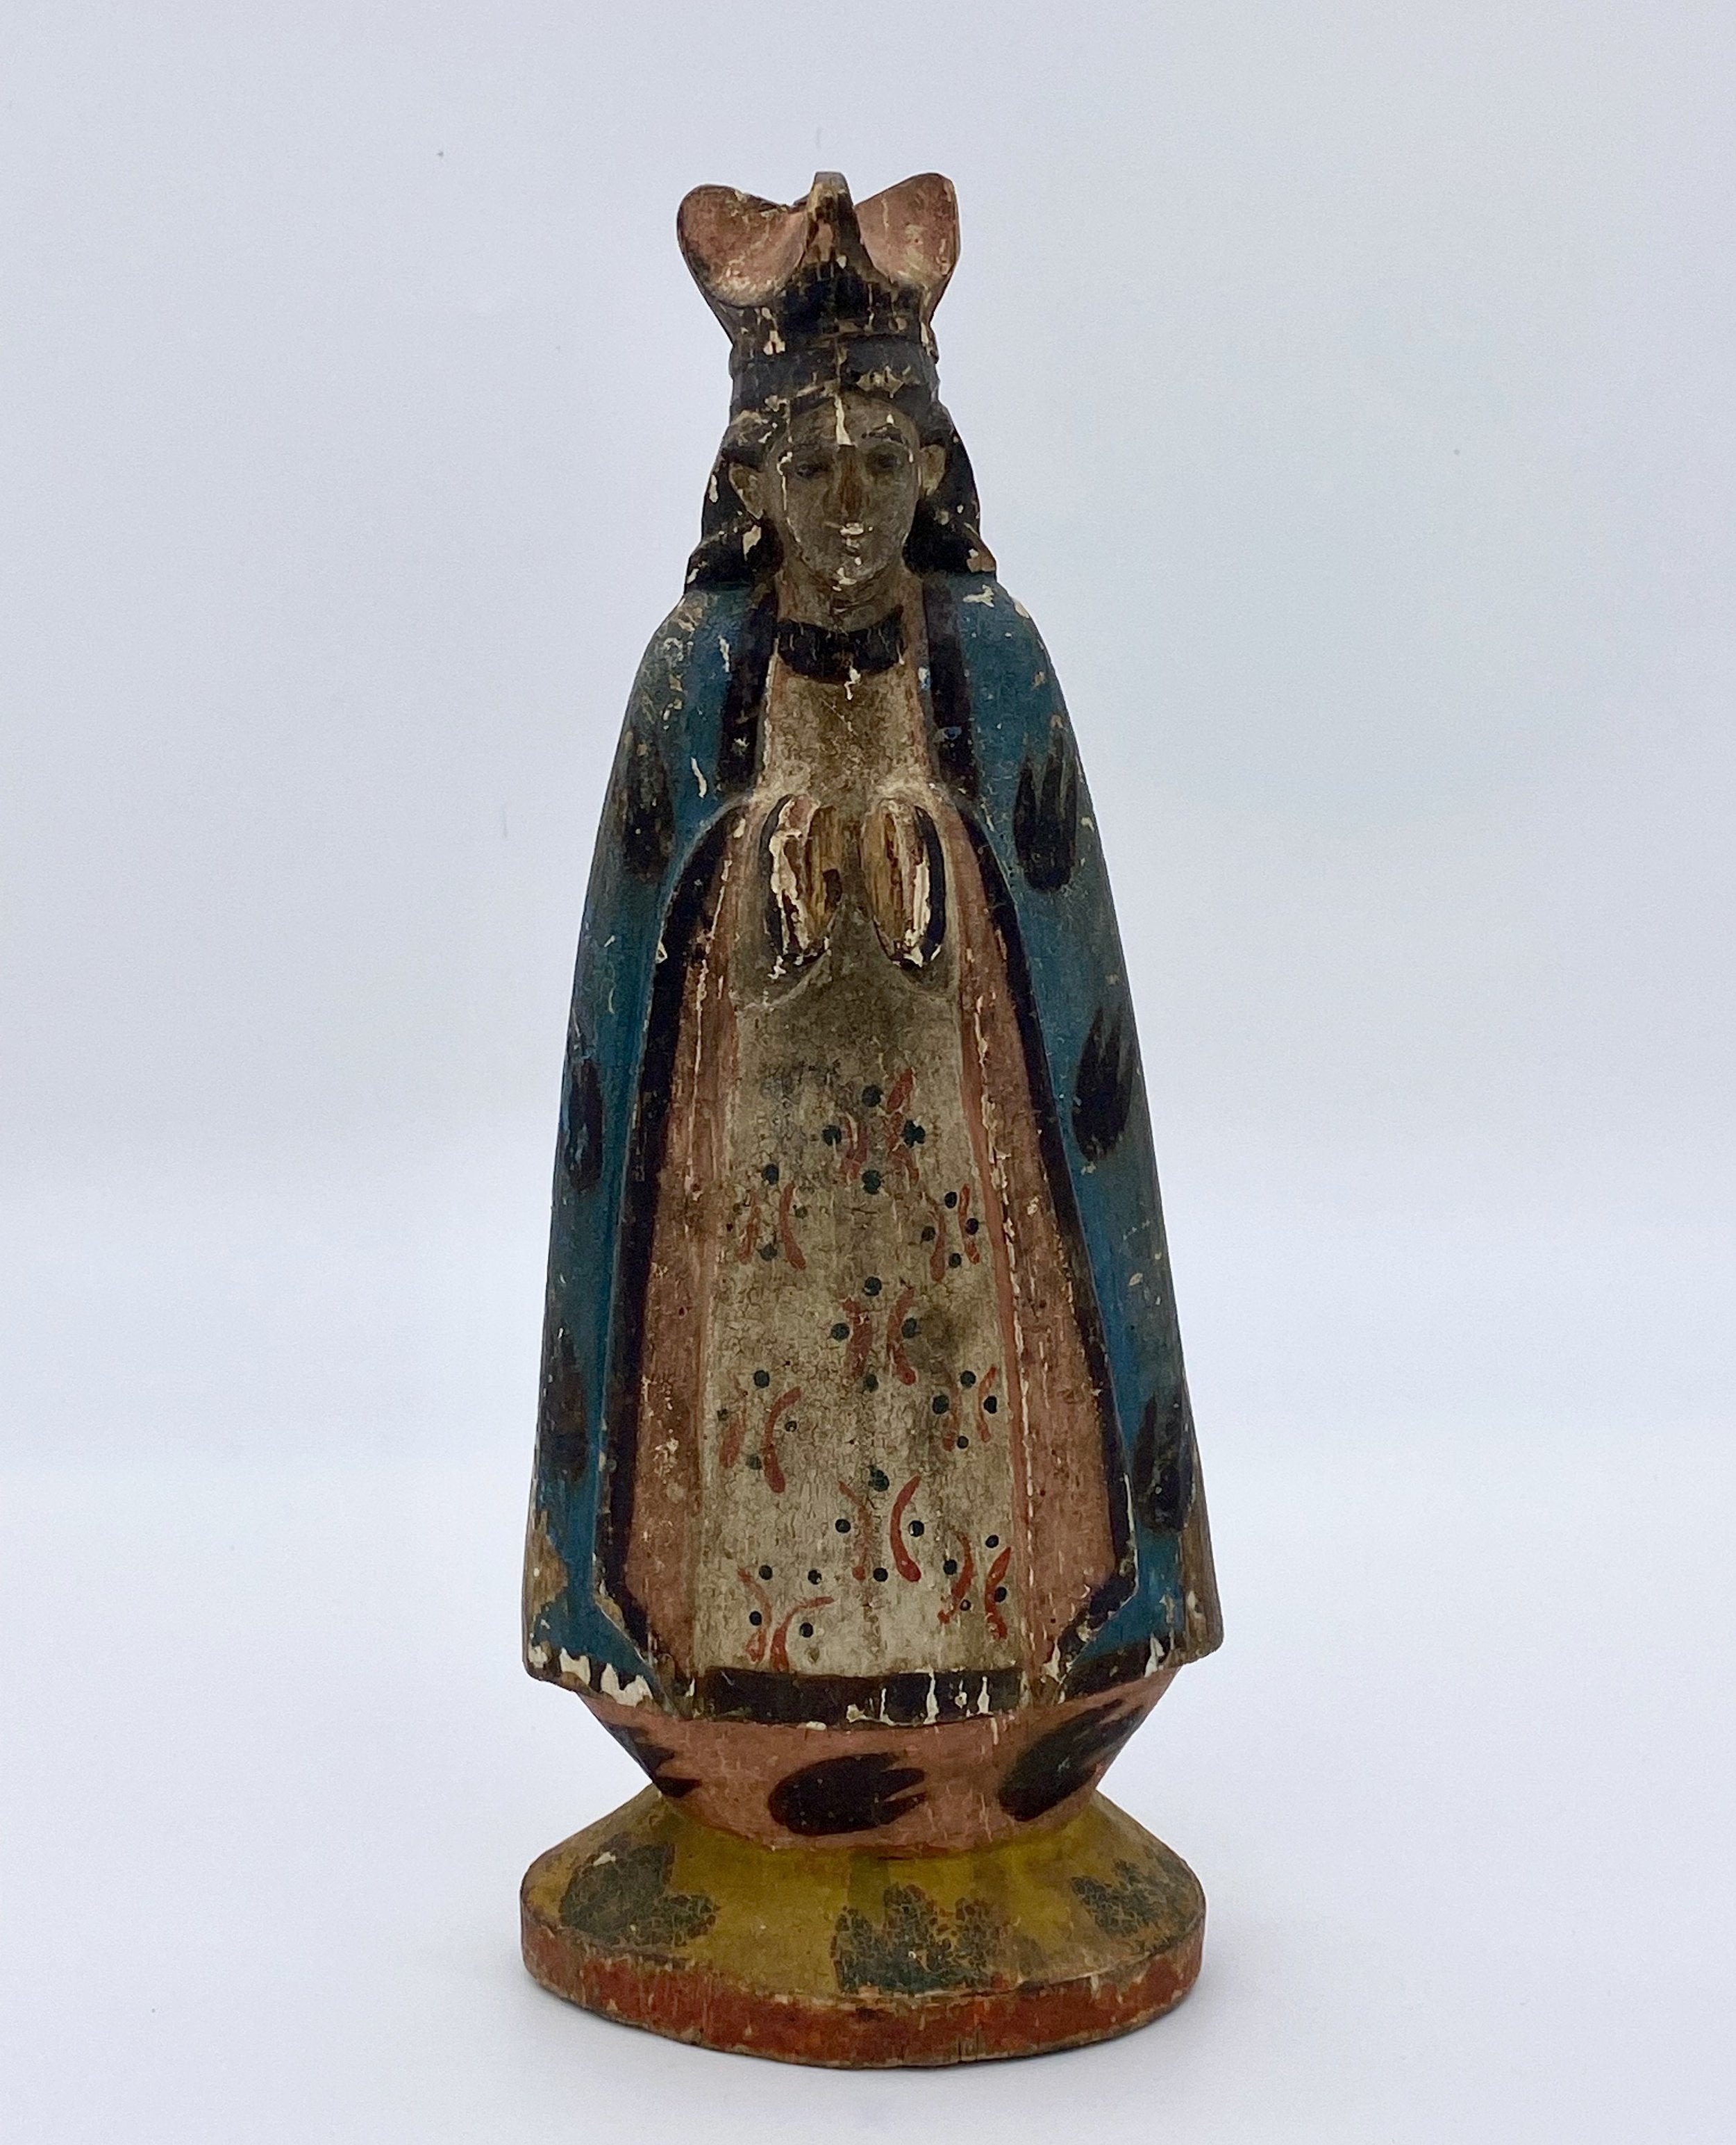 Polychrome and Gilt Spanish Santos Figurine, &quot;Santa Maria, Madre de Dios&quot;. Spanish/Spanish Colonial, 17thC